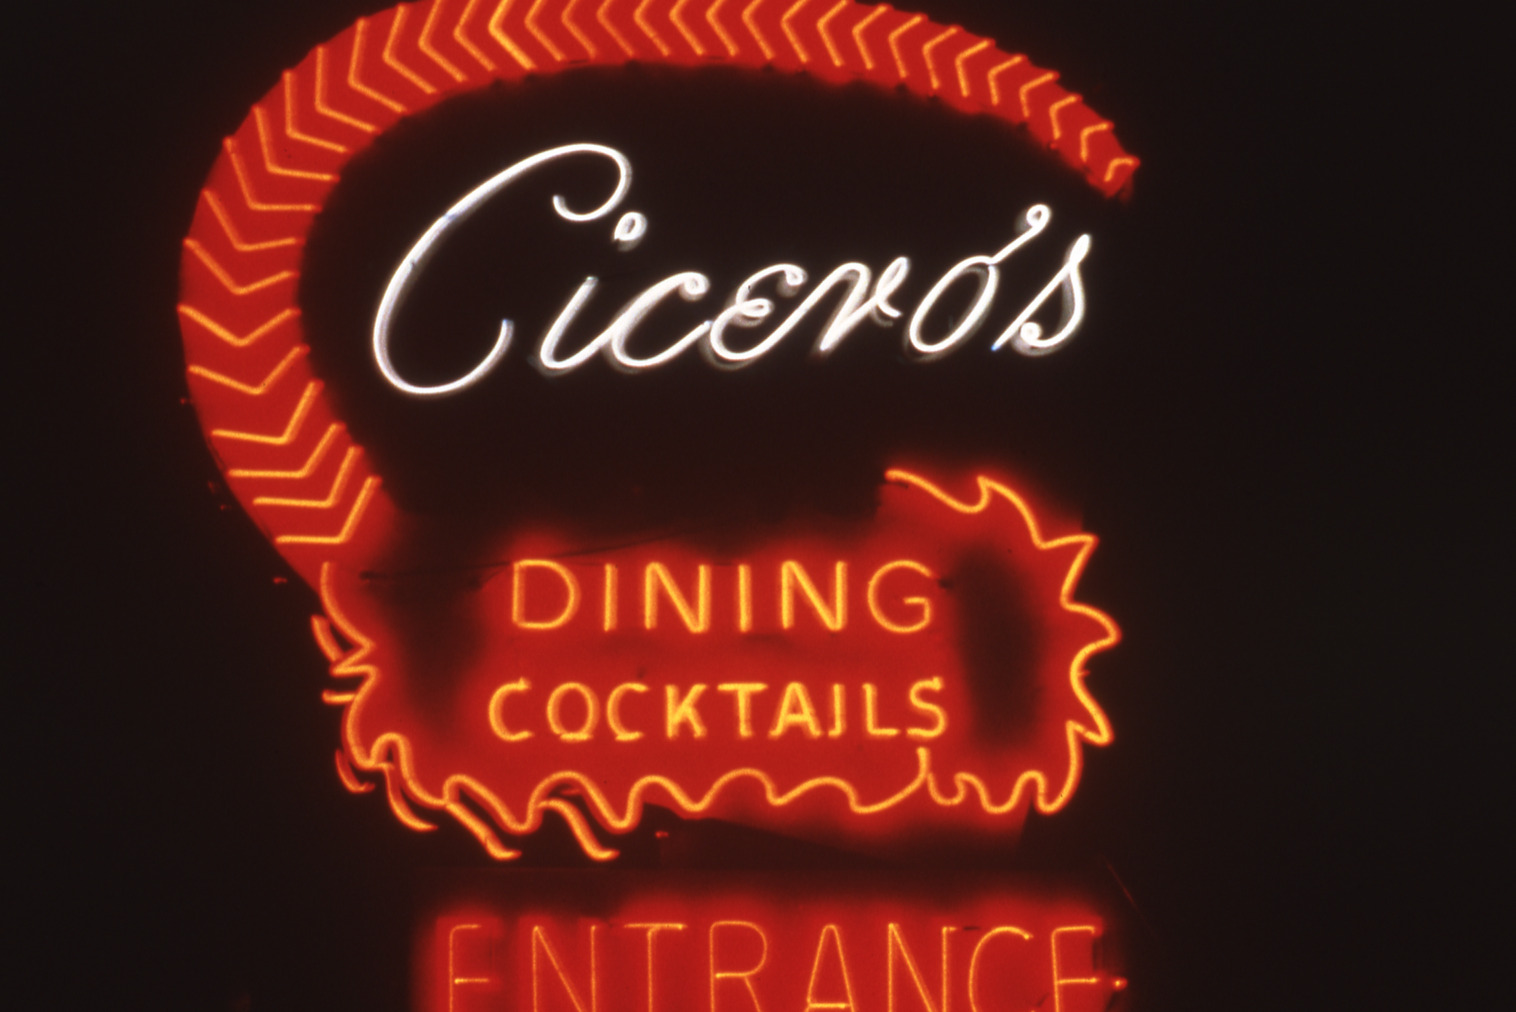 Cicero's Dining sign, Reno, Nevada: photographic print